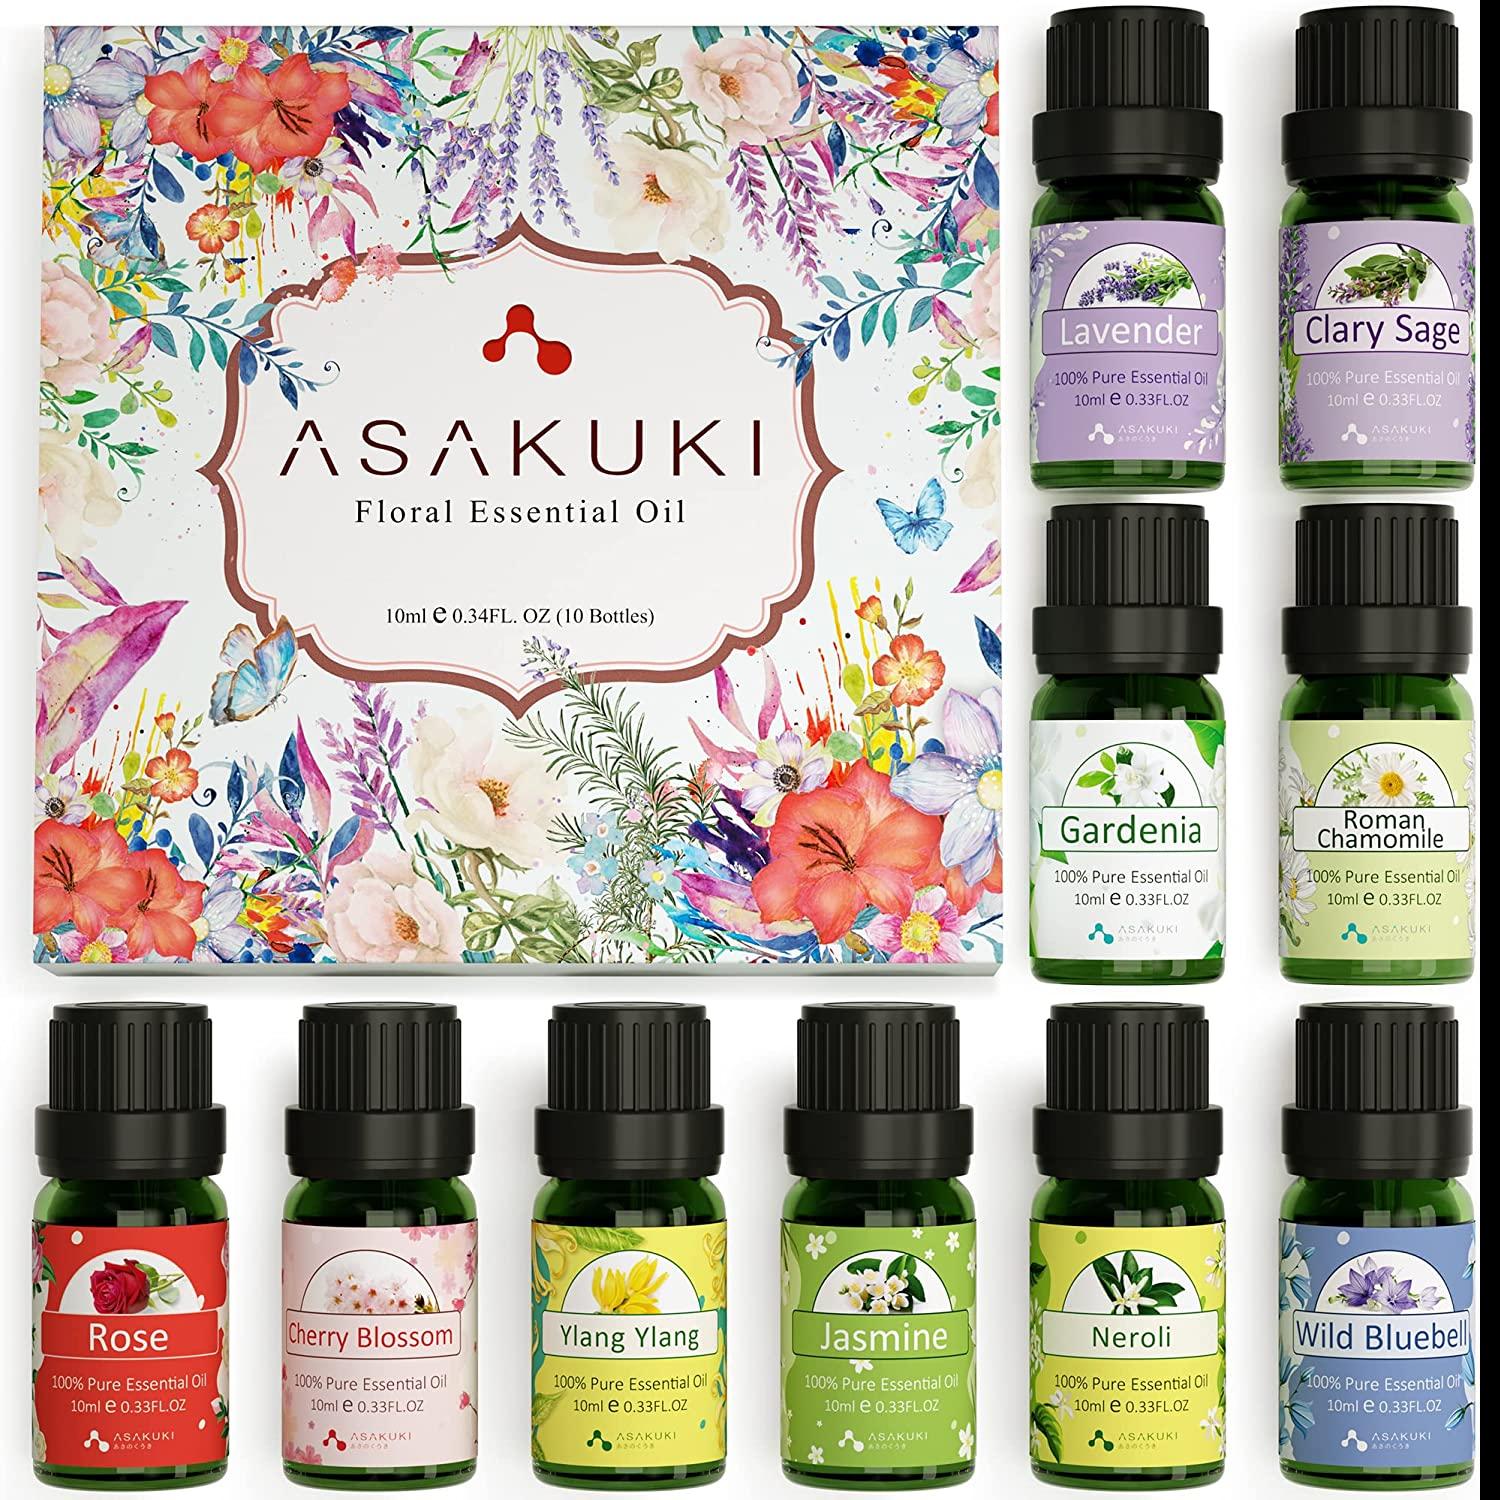 Asakuki Floral Essential Oil Gift Set for $6.74